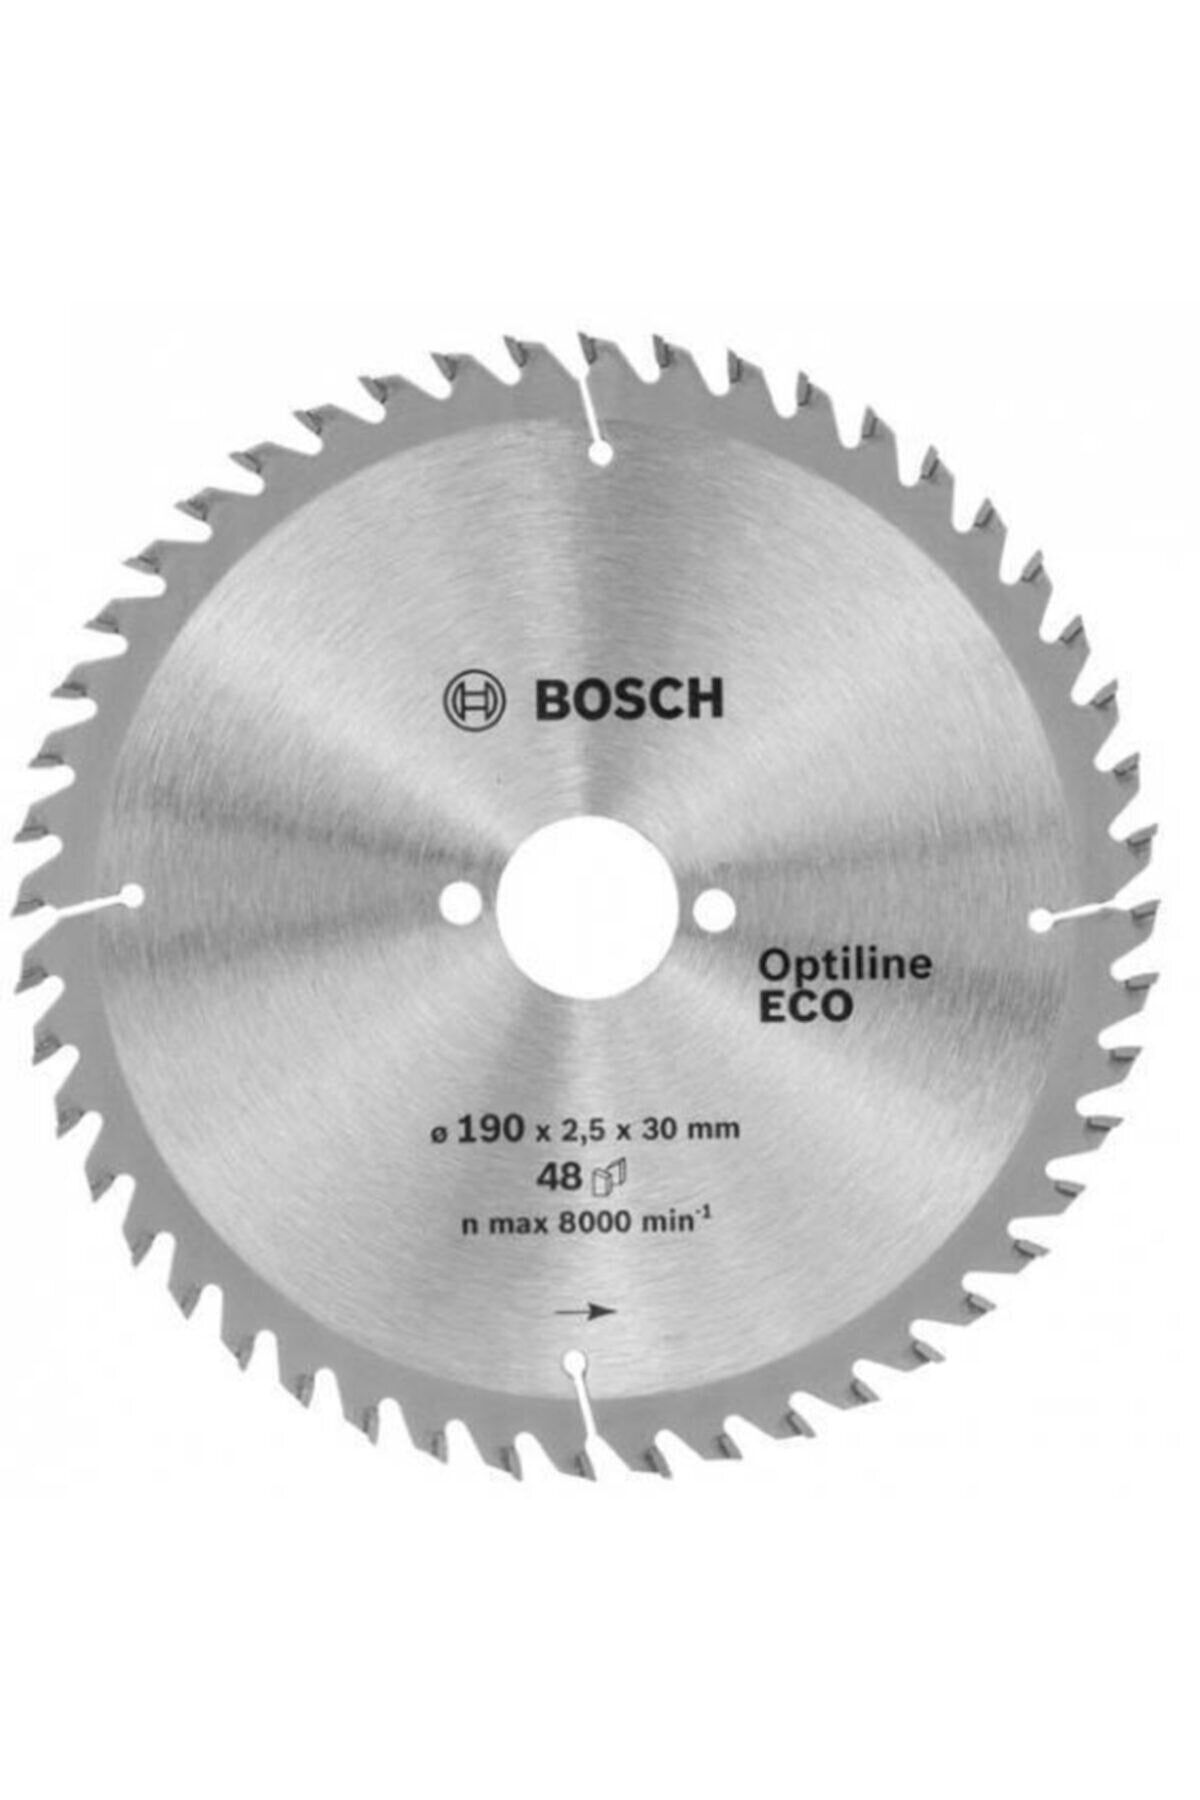 Bosch Optine Eco Daire Testere Bıçağı 190x30 Mm 48 Diş 2 608 641 790